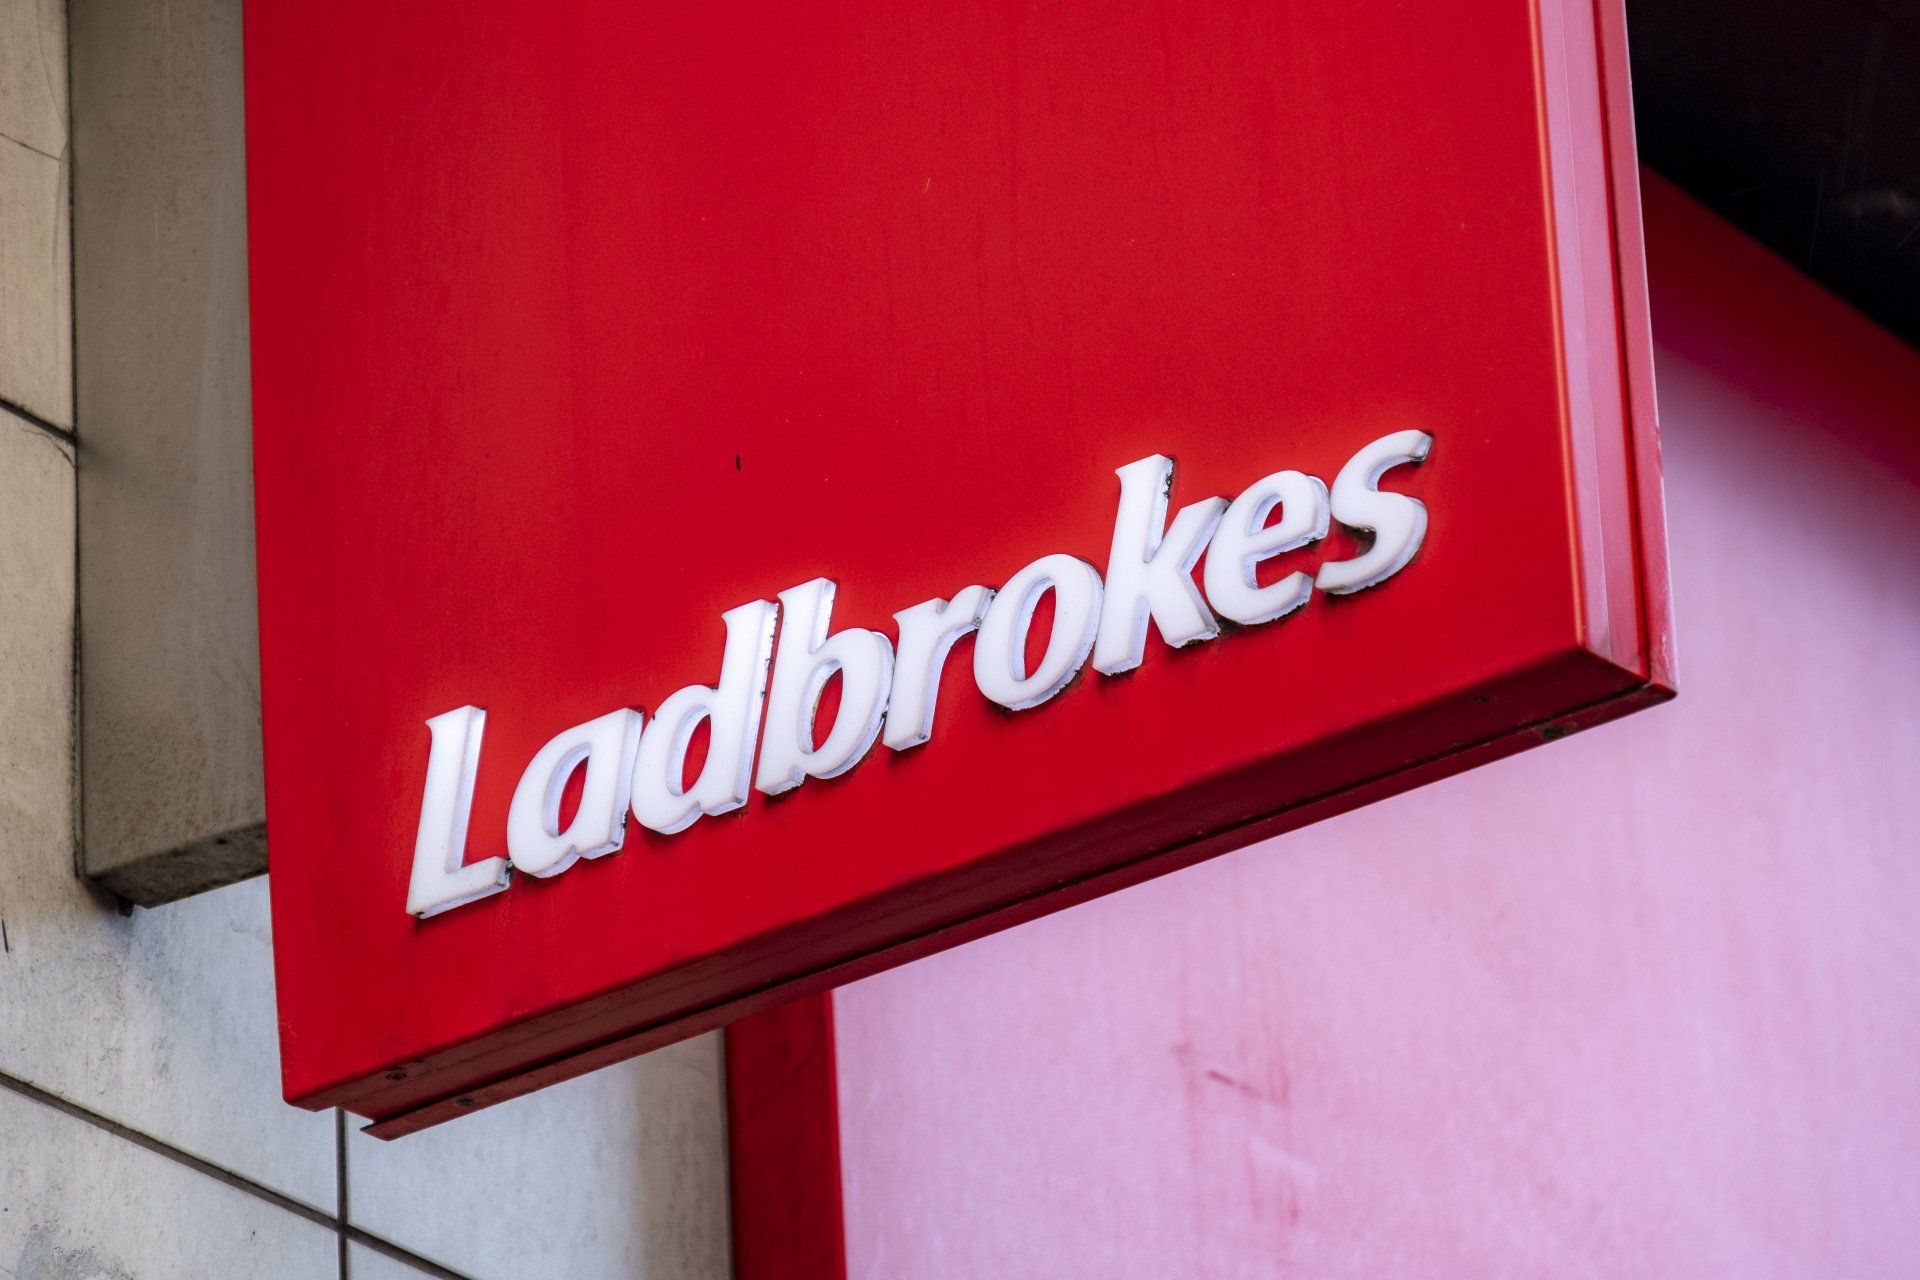 Ladbrokes logo on signage